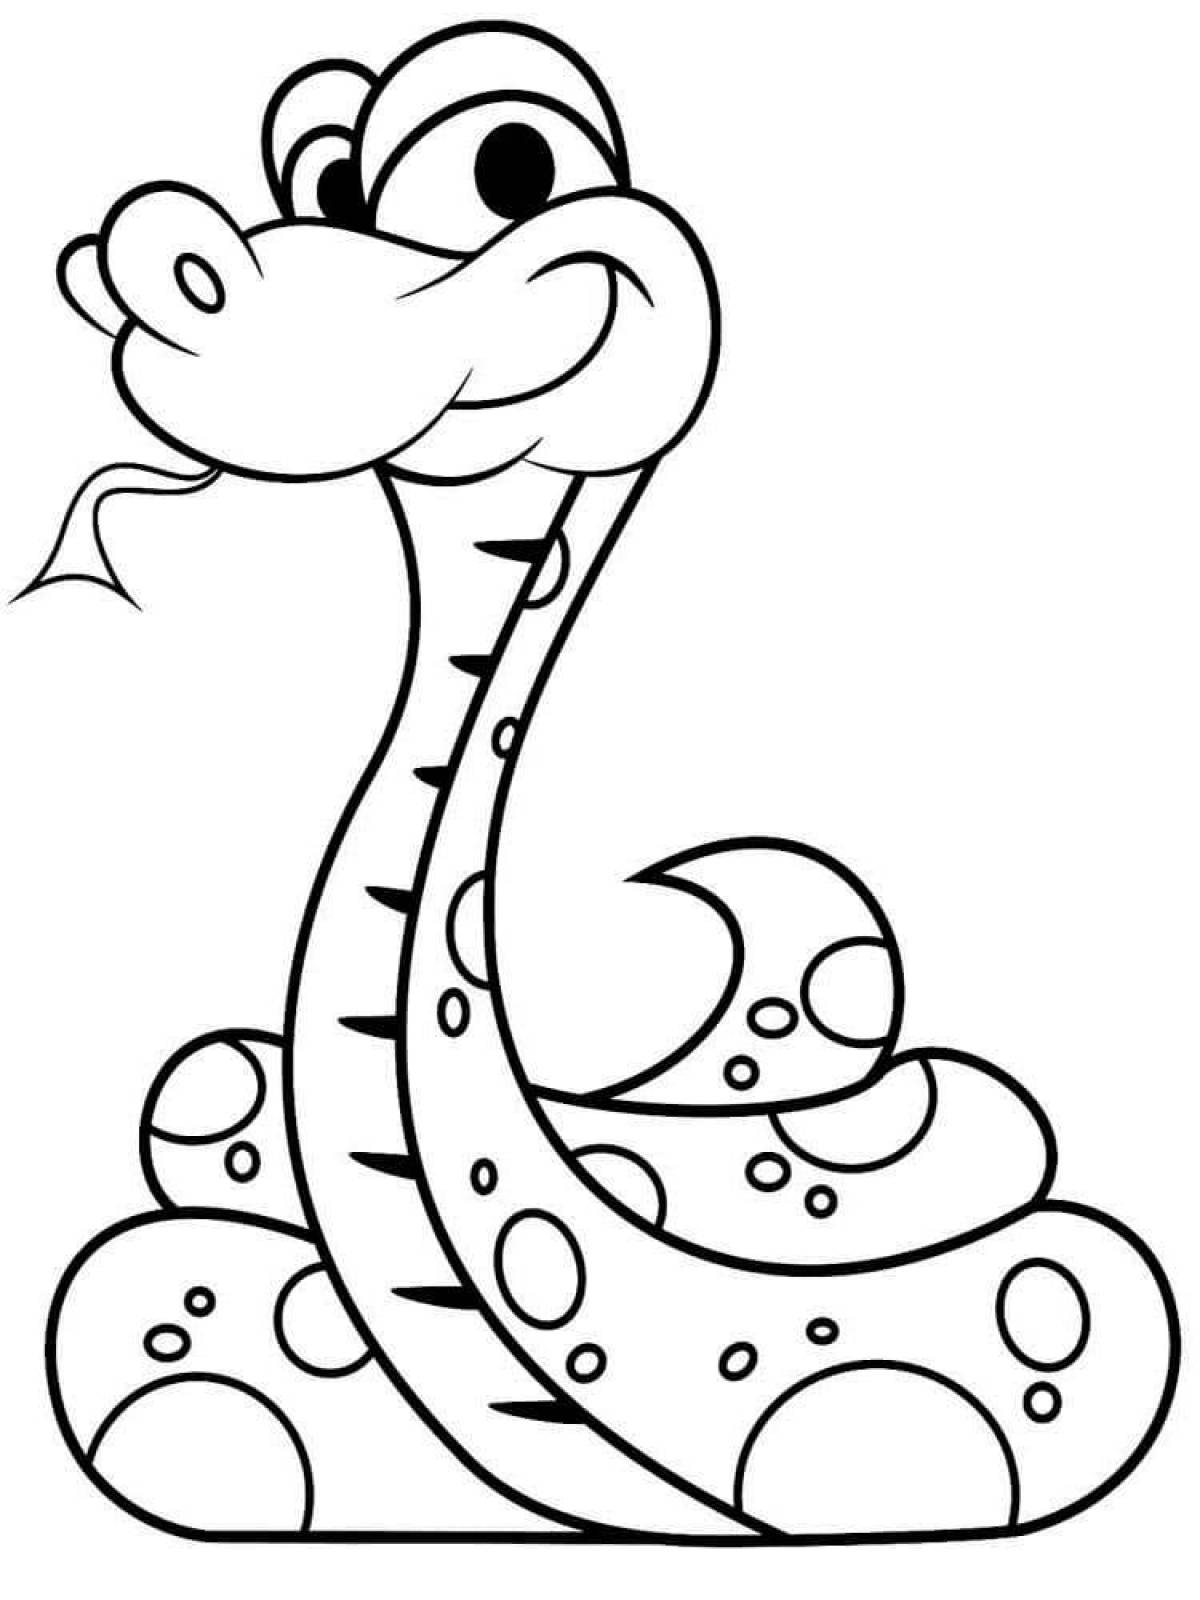 Fun snake coloring for kids